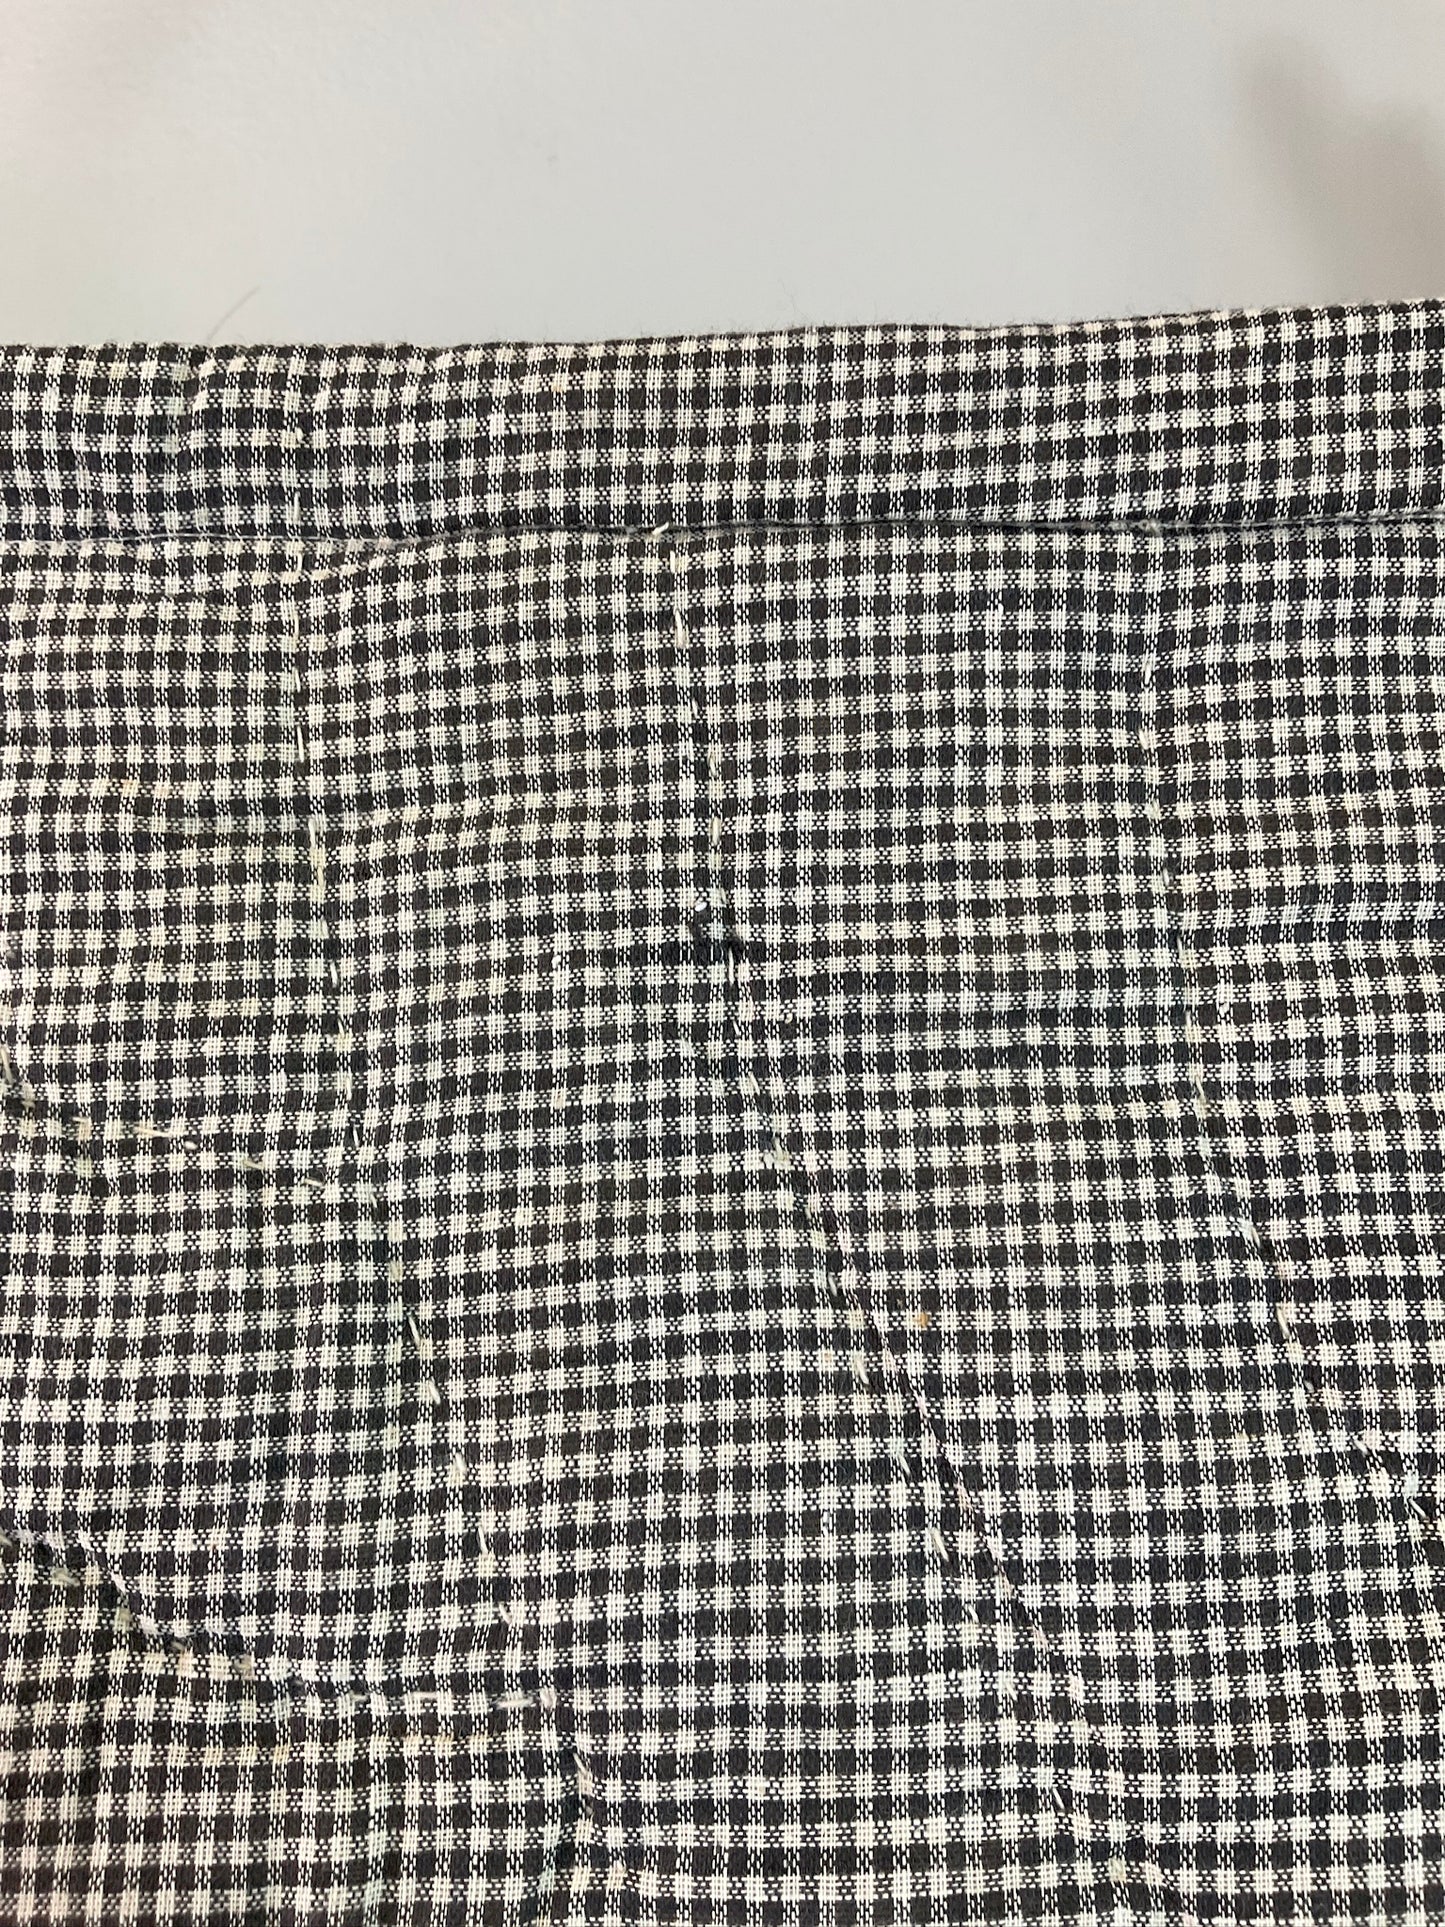 Vintage Hand Stitched Bowtie Quilt, Black & White Plaid Trim